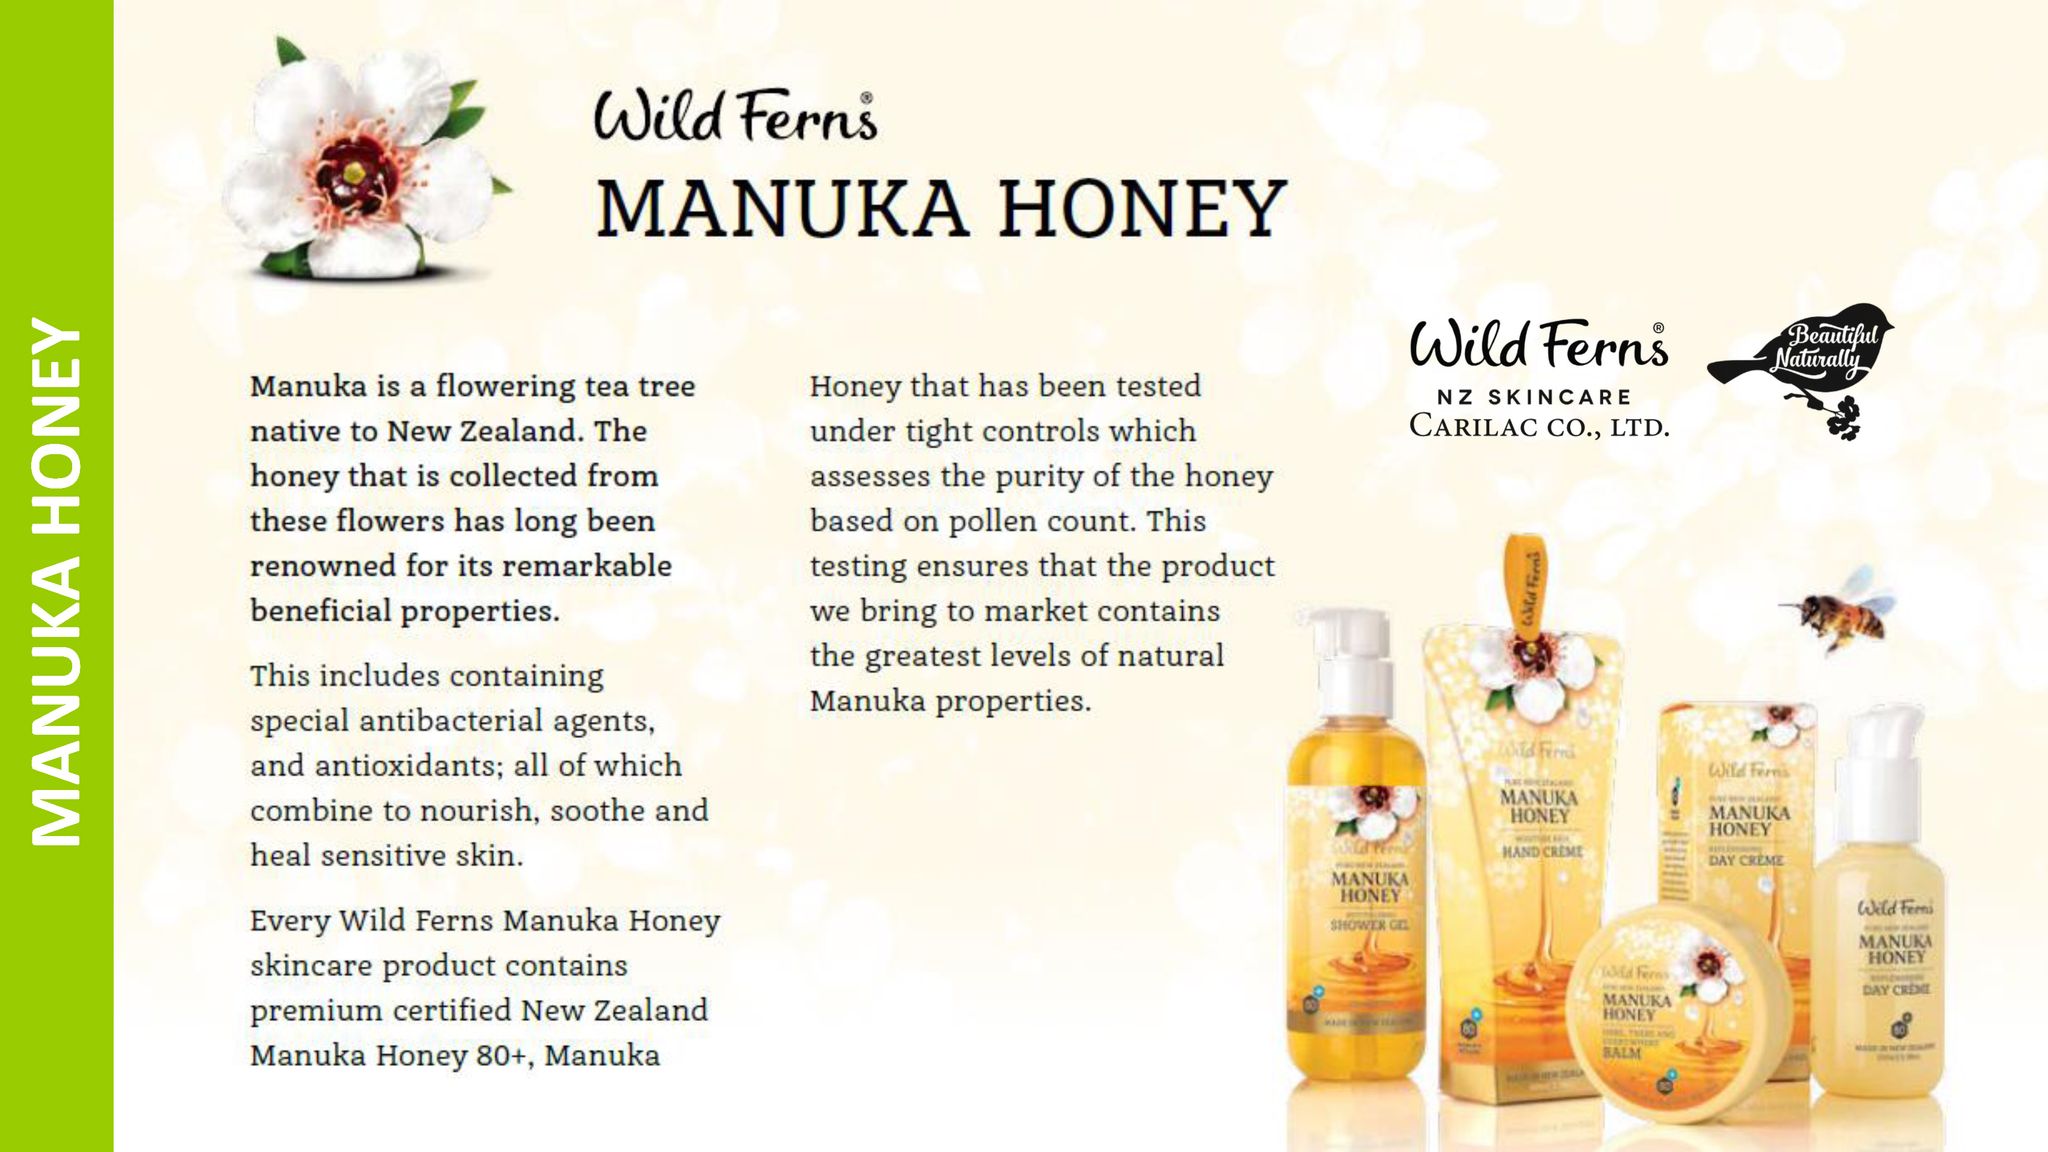 Wild Ferns Manuka Honey Description